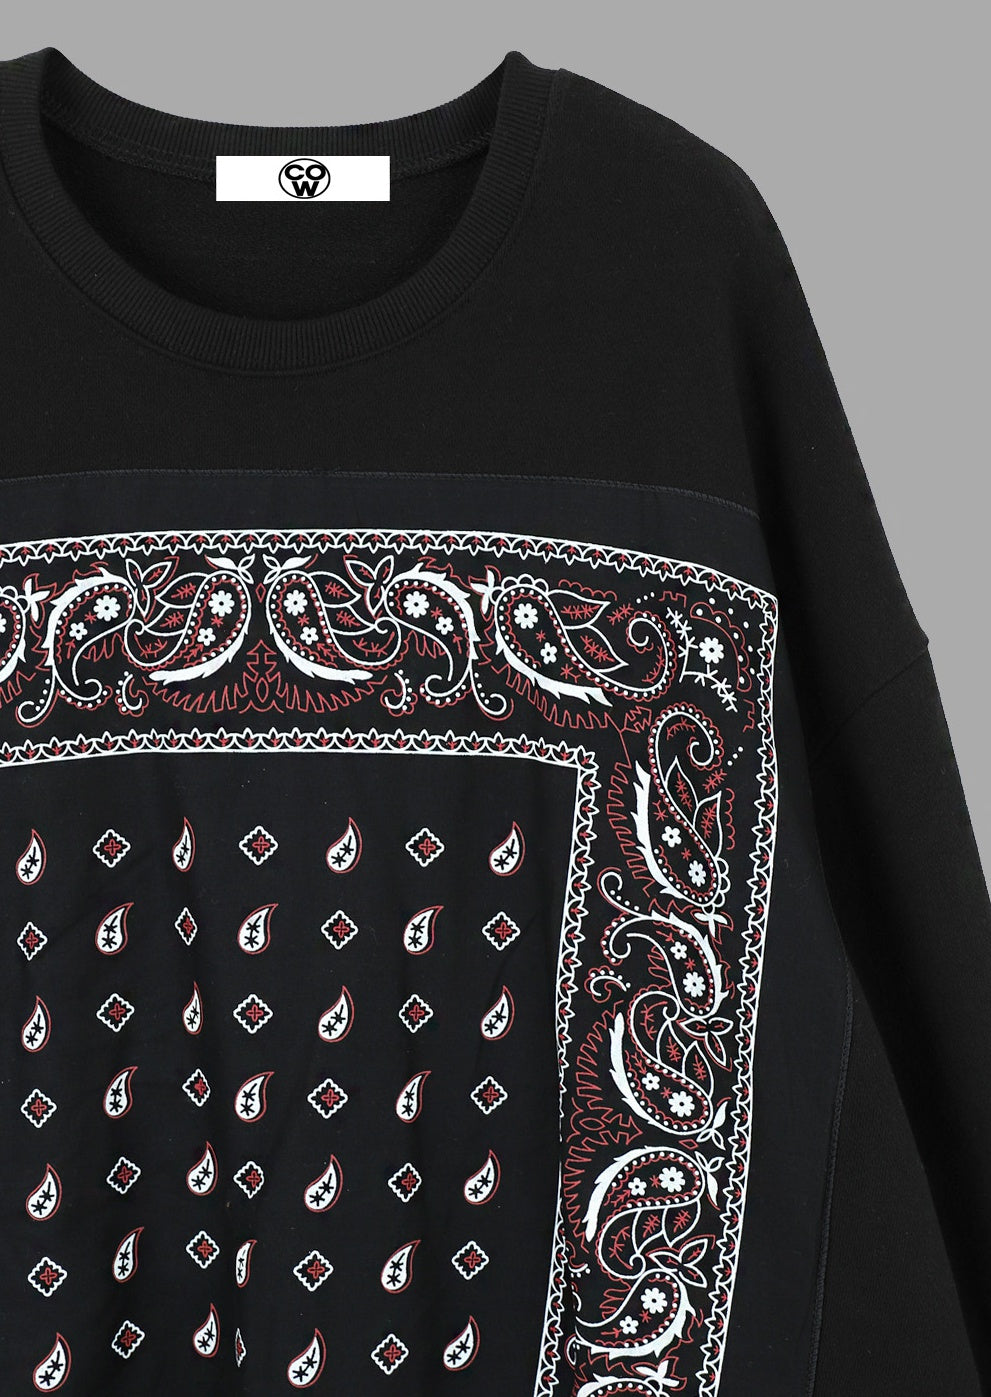 Black Paisley Crewneck Sweatshirts Mens Crewneck Tops Bandana Pattern